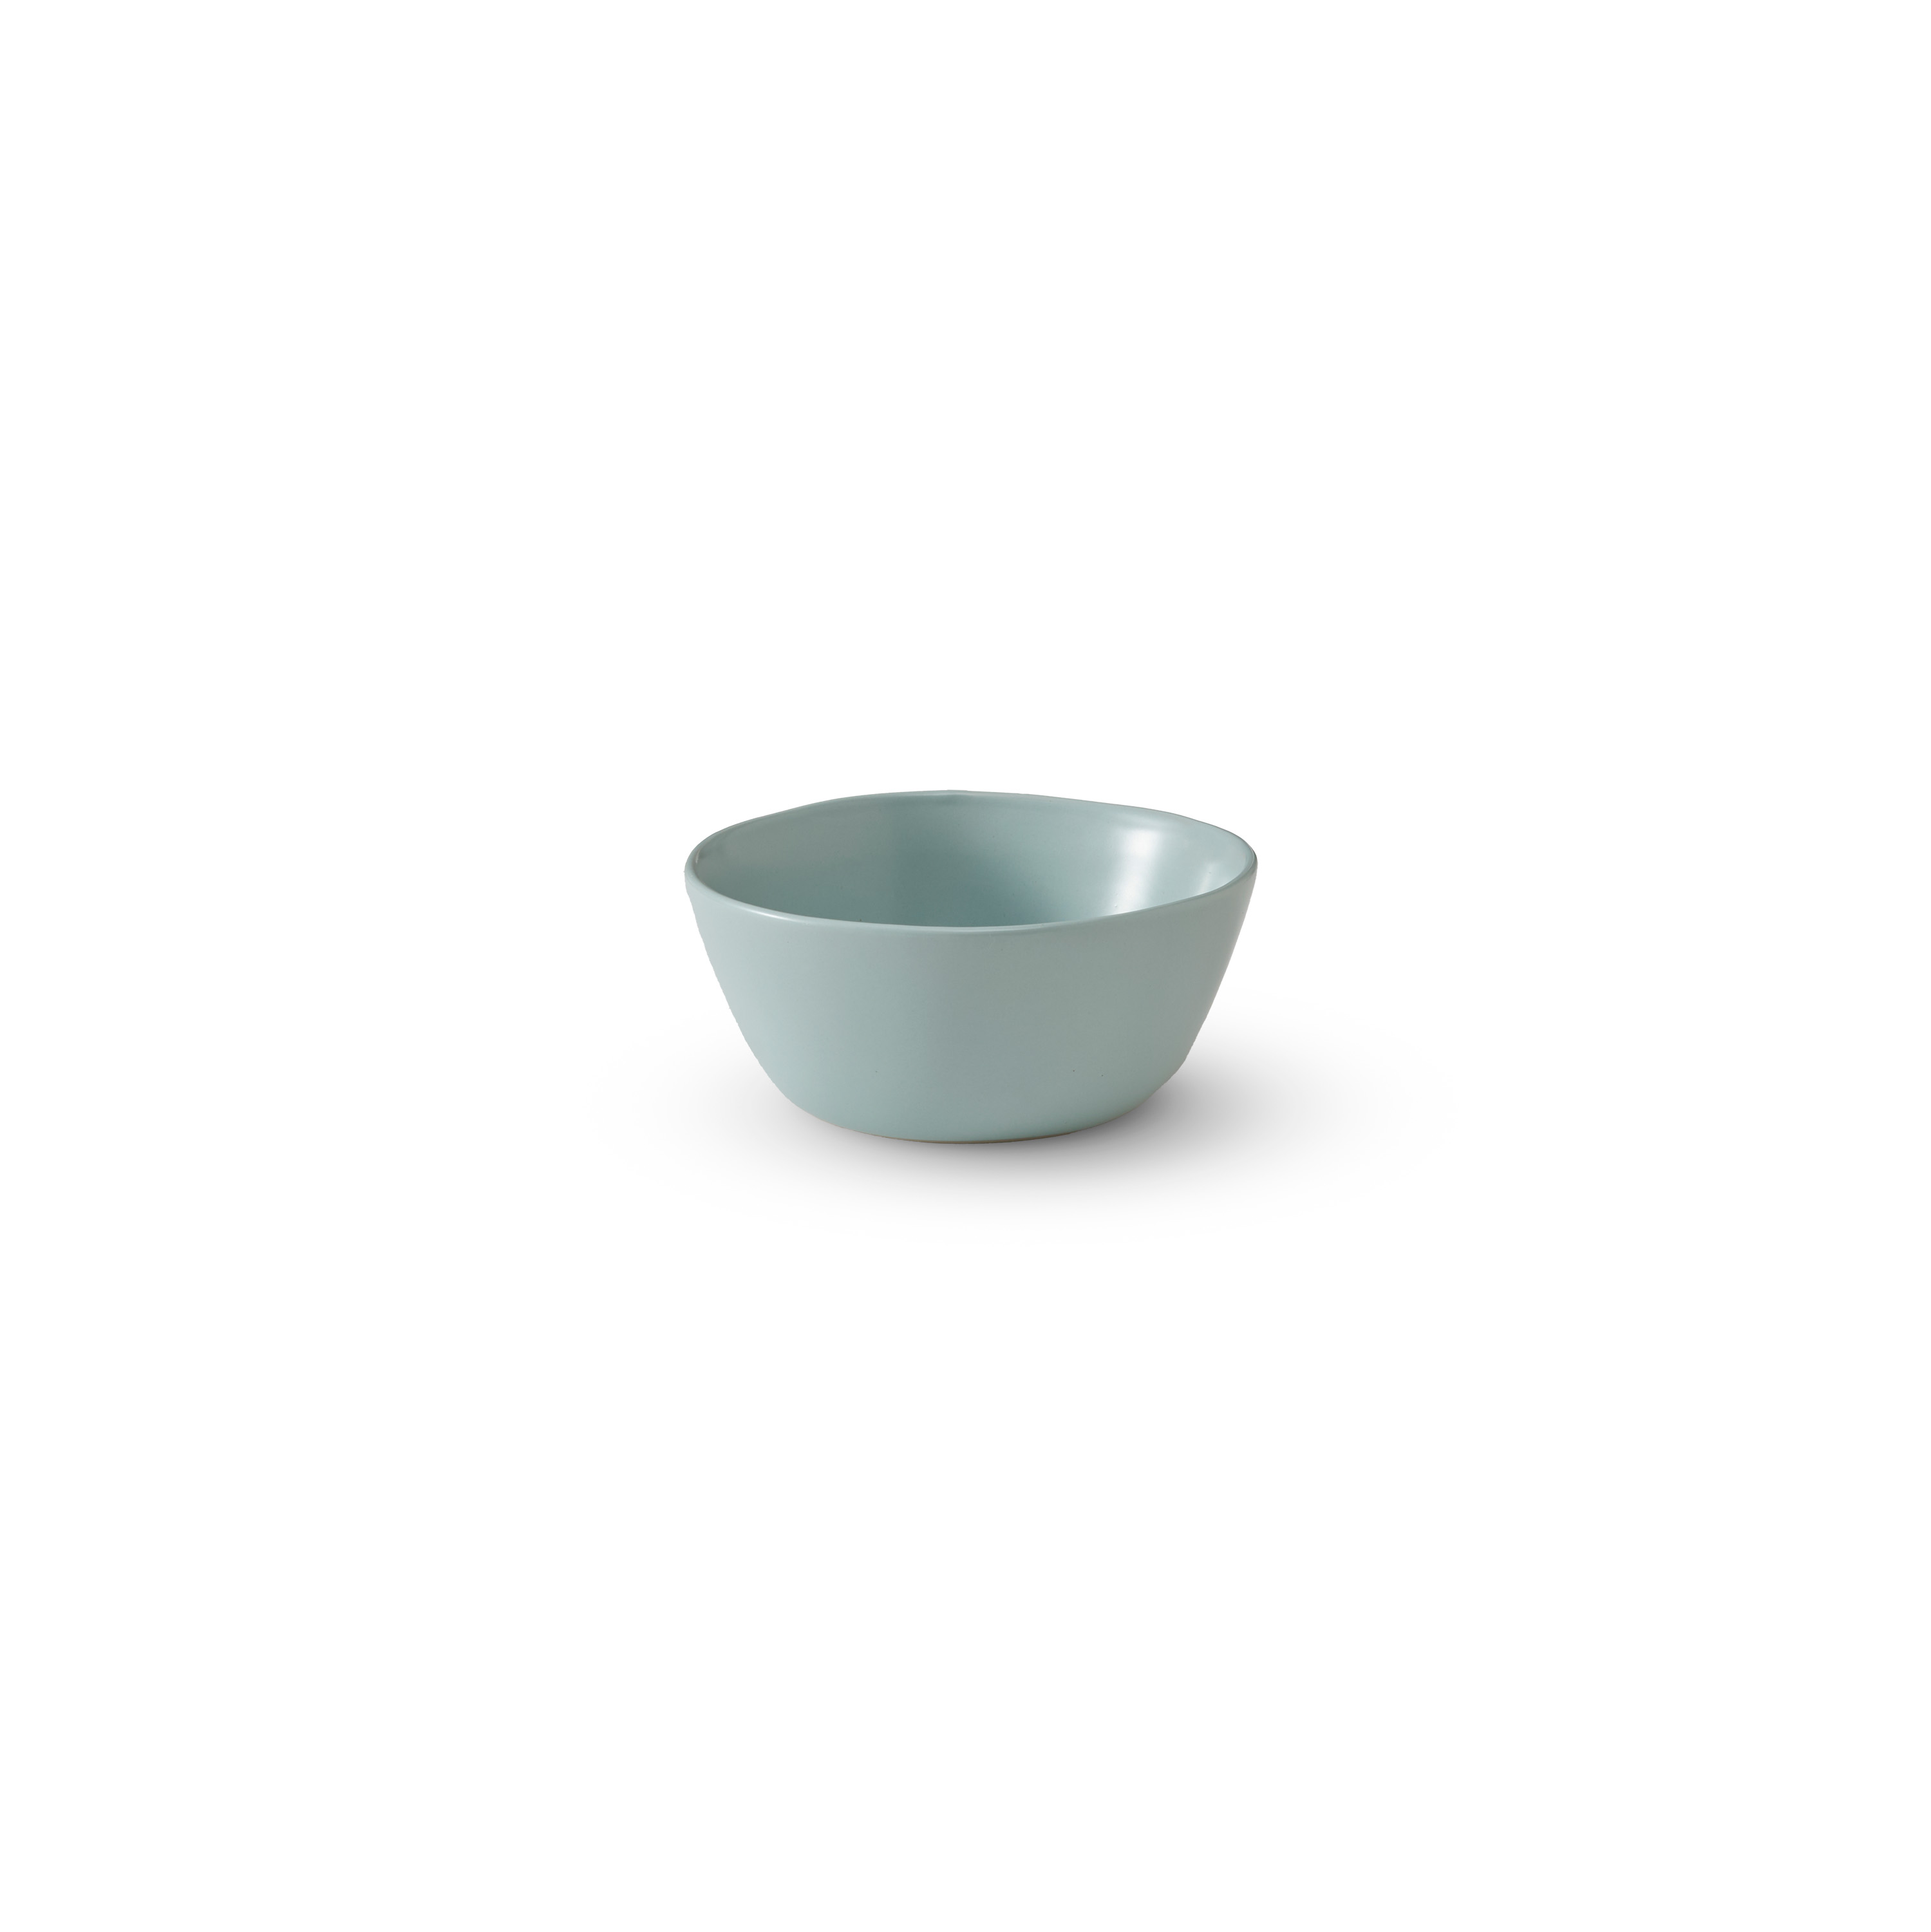 Tonkin Rice Bowl: Light blue